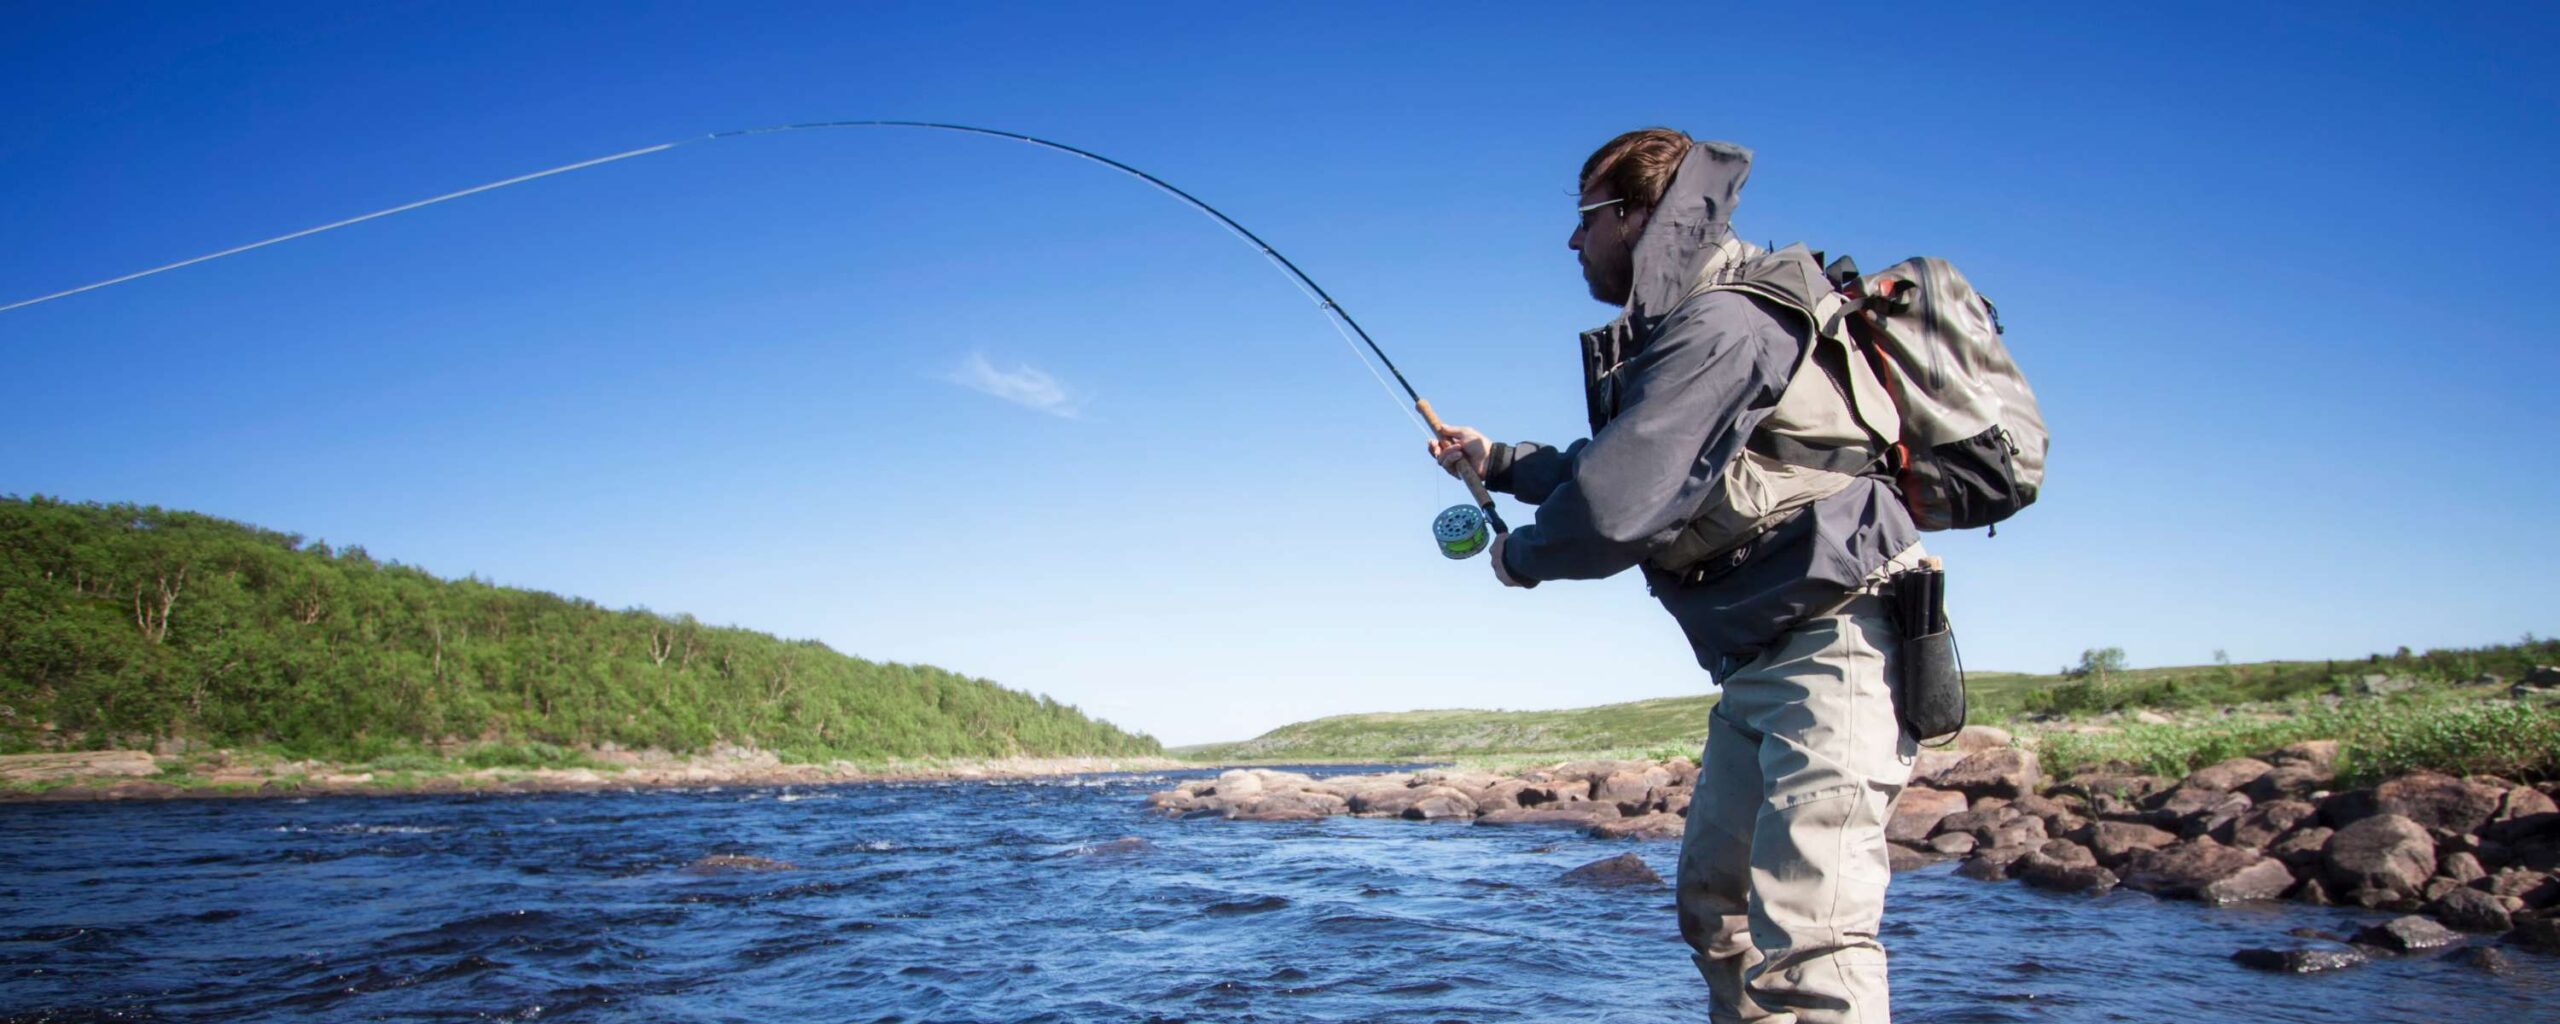 Travel for Poconos Fly Fishing in the Delaware River